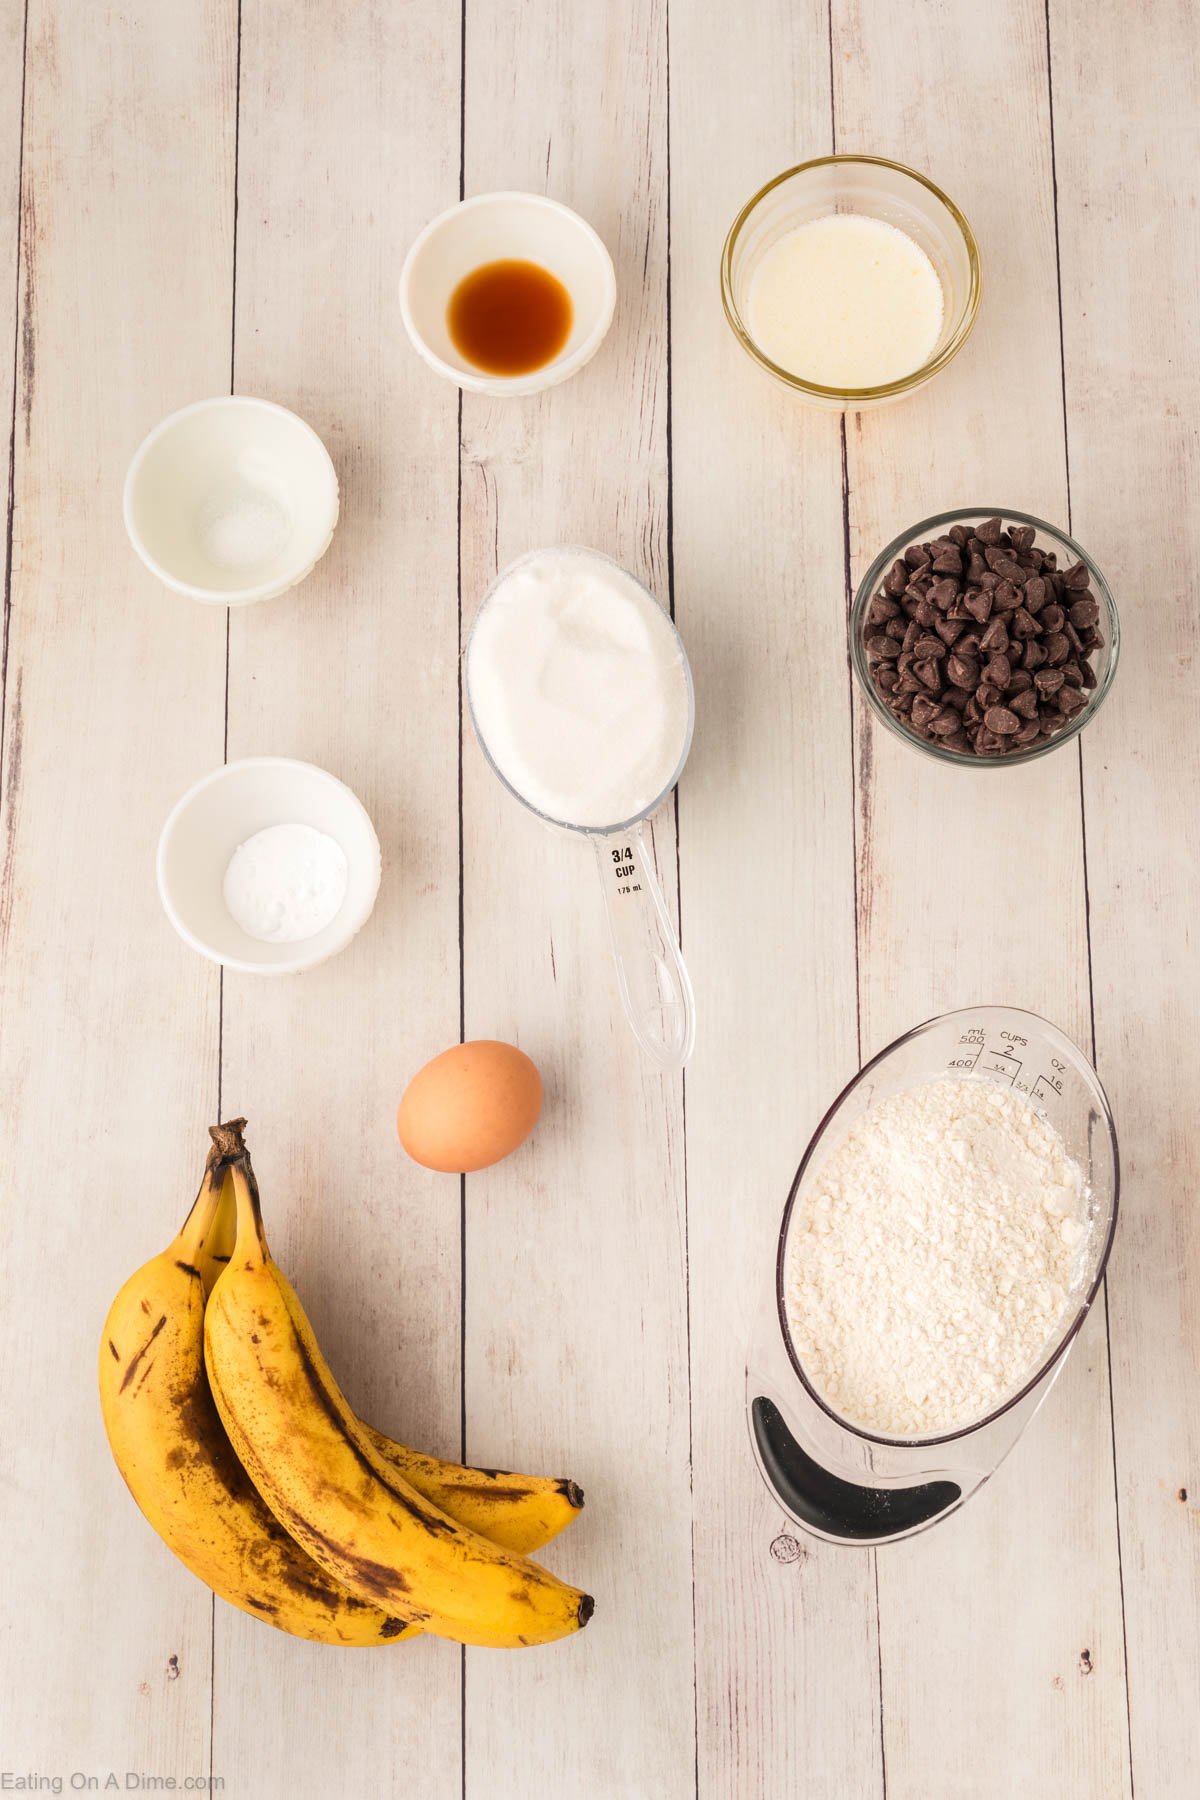 Ingredients needed - bananas, butter, eggs, sugar, vanilla, baking soda, salt, flour, chocolate chips